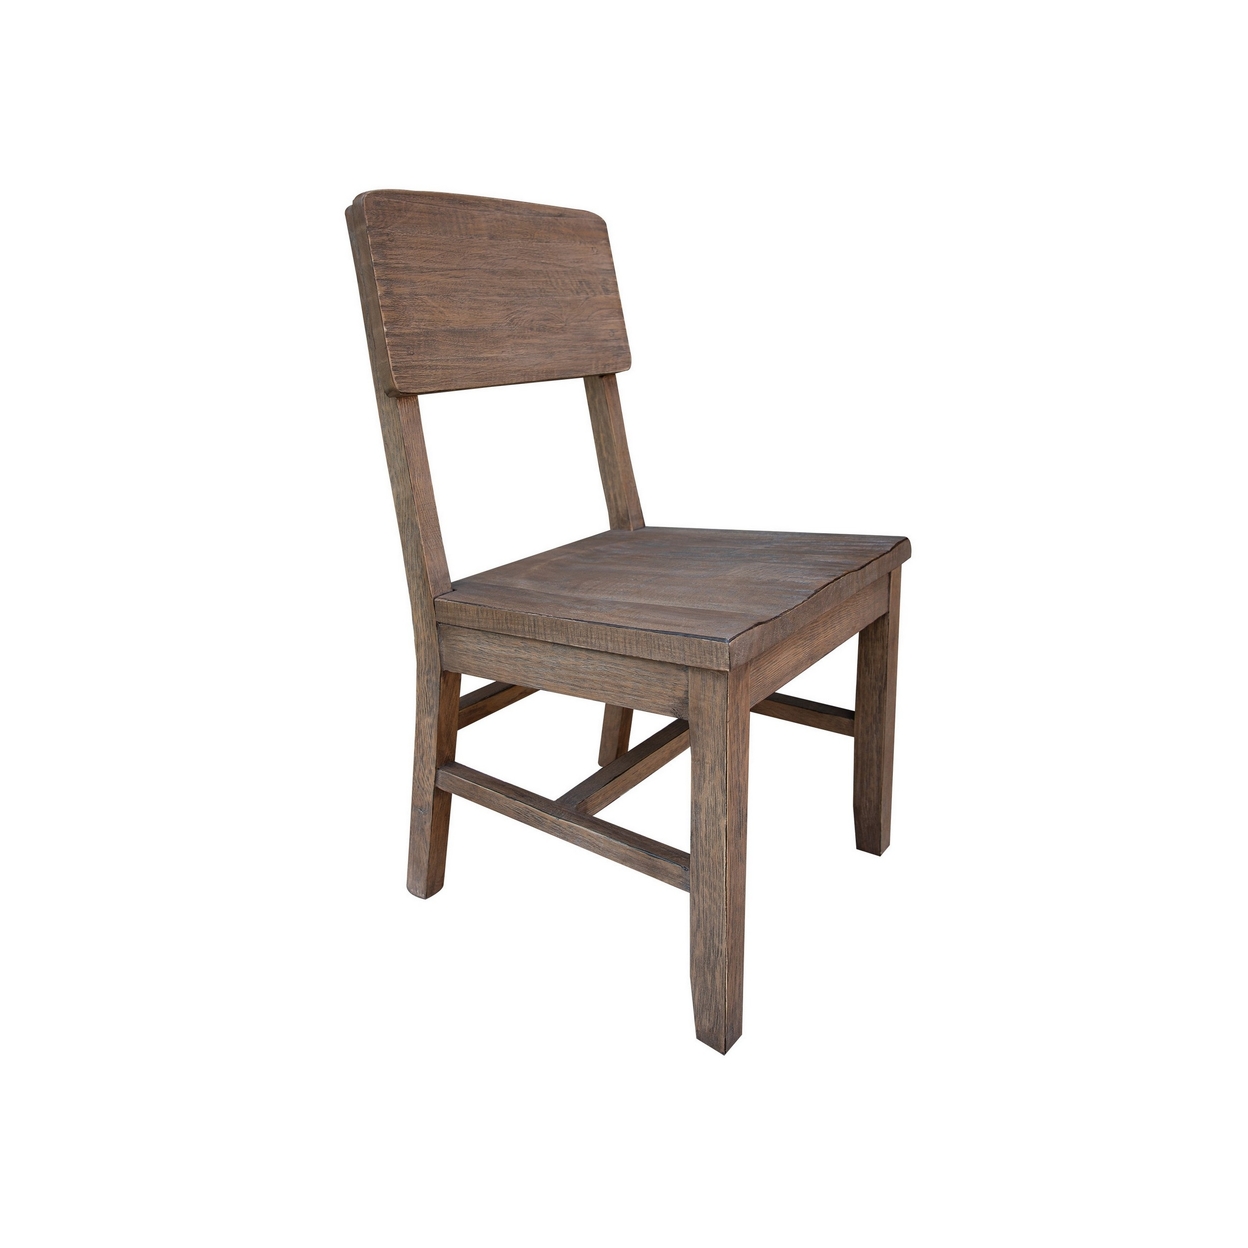 Kohl 19 Inch Dining Chair Set Of 2, Mango And Pine Wood Grains, Rich Brown- Saltoro Sherpi